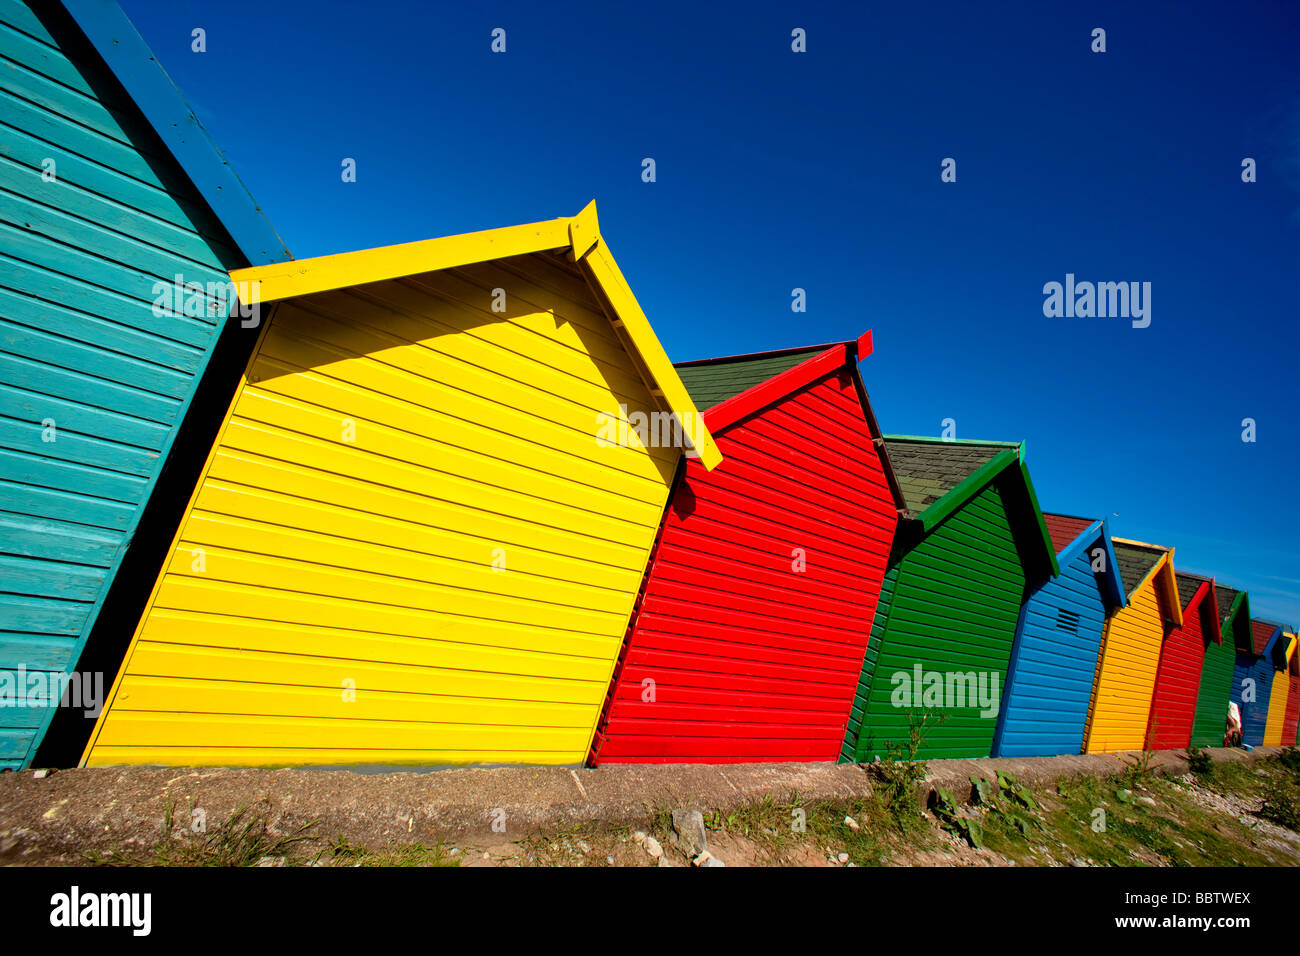 Cabañas de playa Whitby Foto de stock